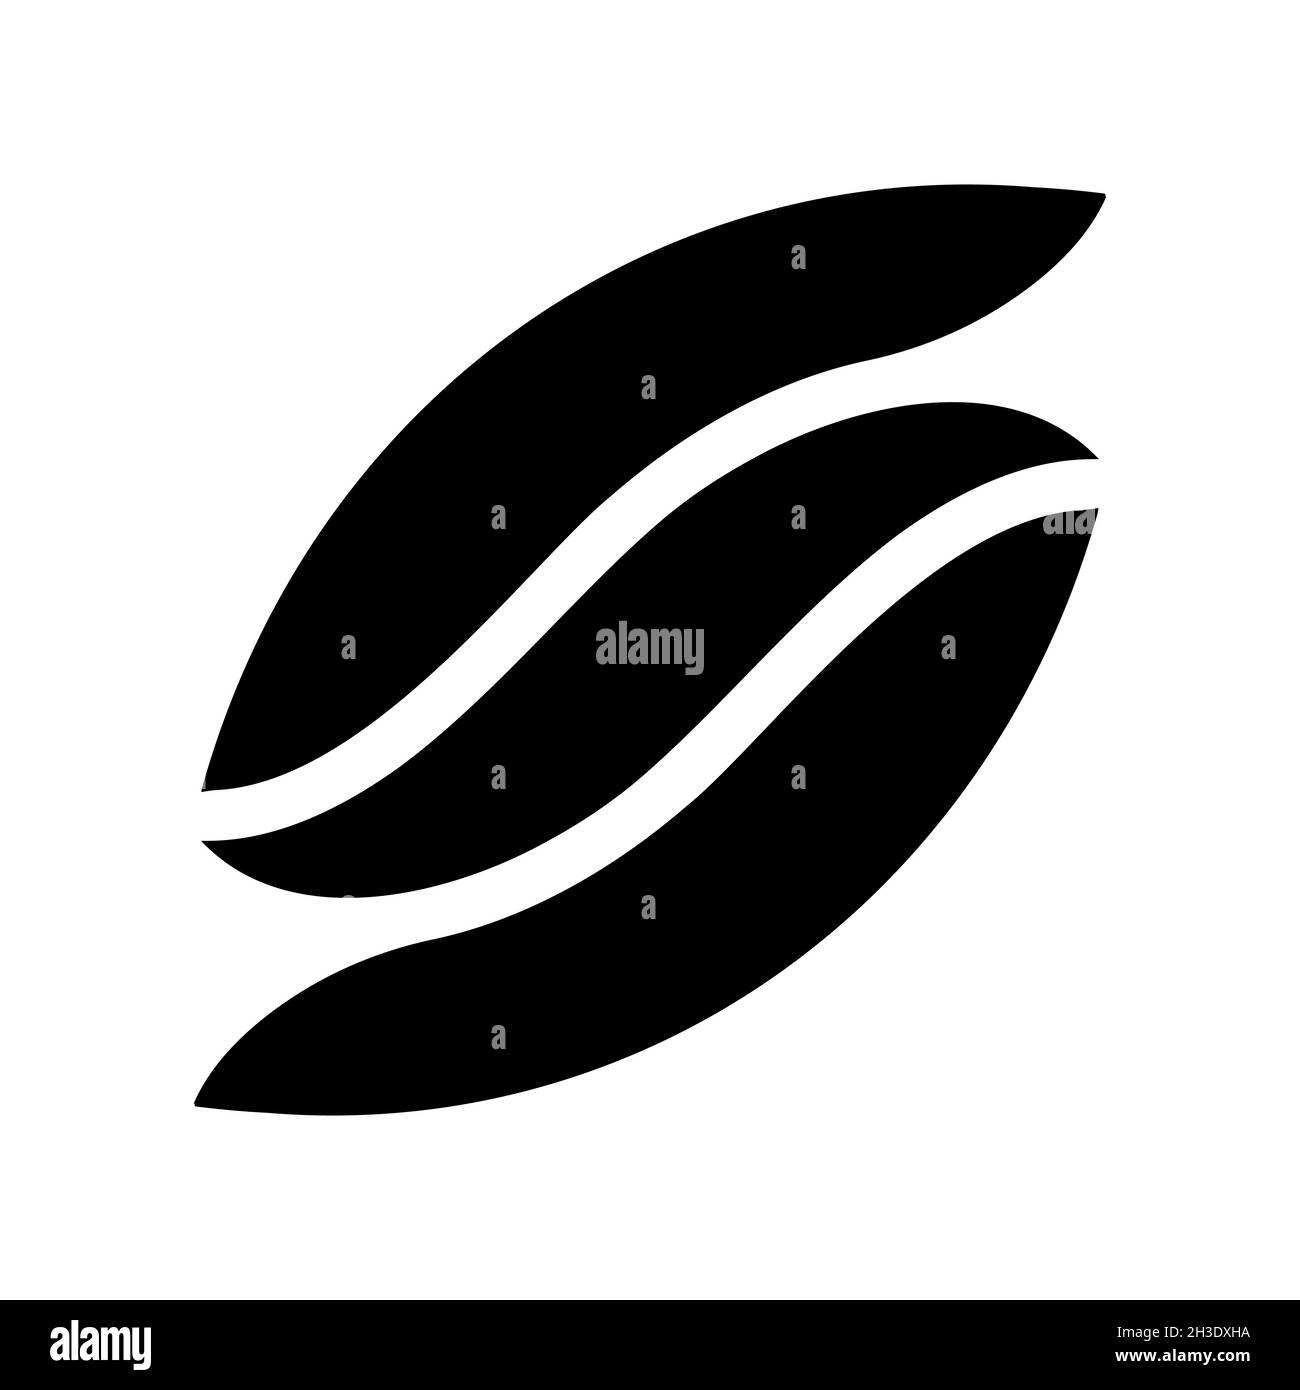 Oval coffee bean logo made of three elegant leaf-shaped stripes stock illustration Stock Vector